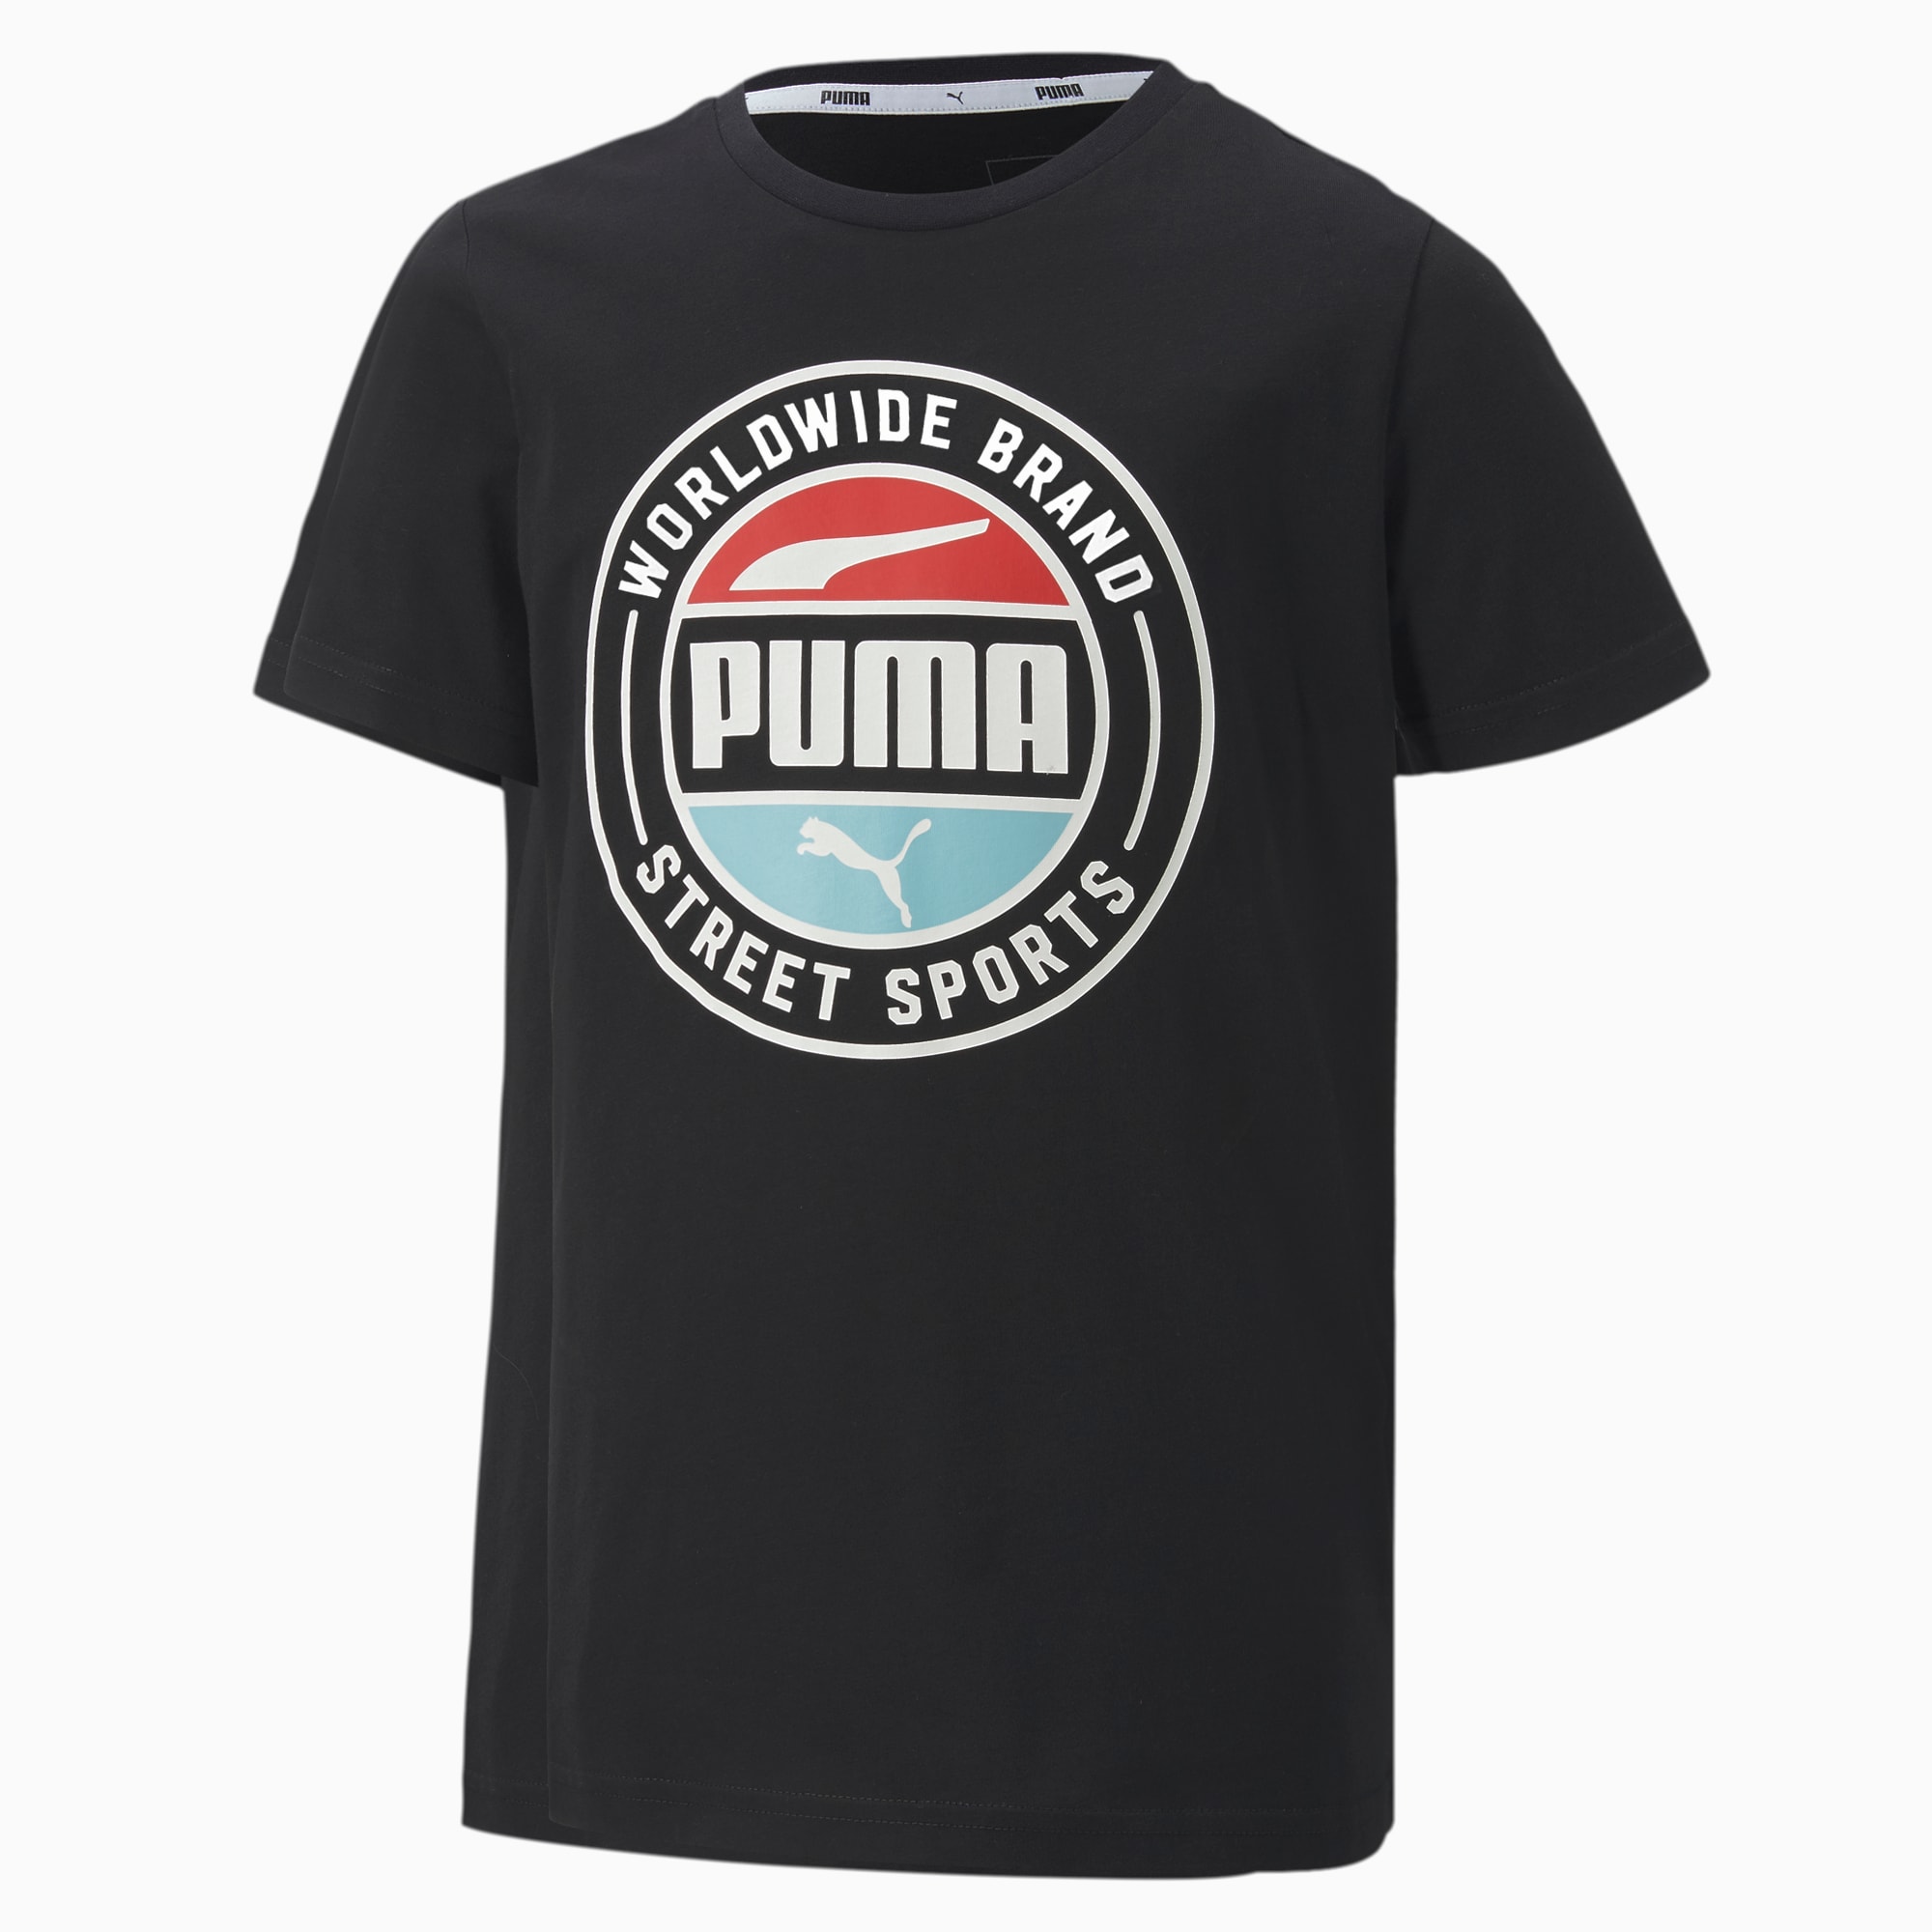 puma boys shirt